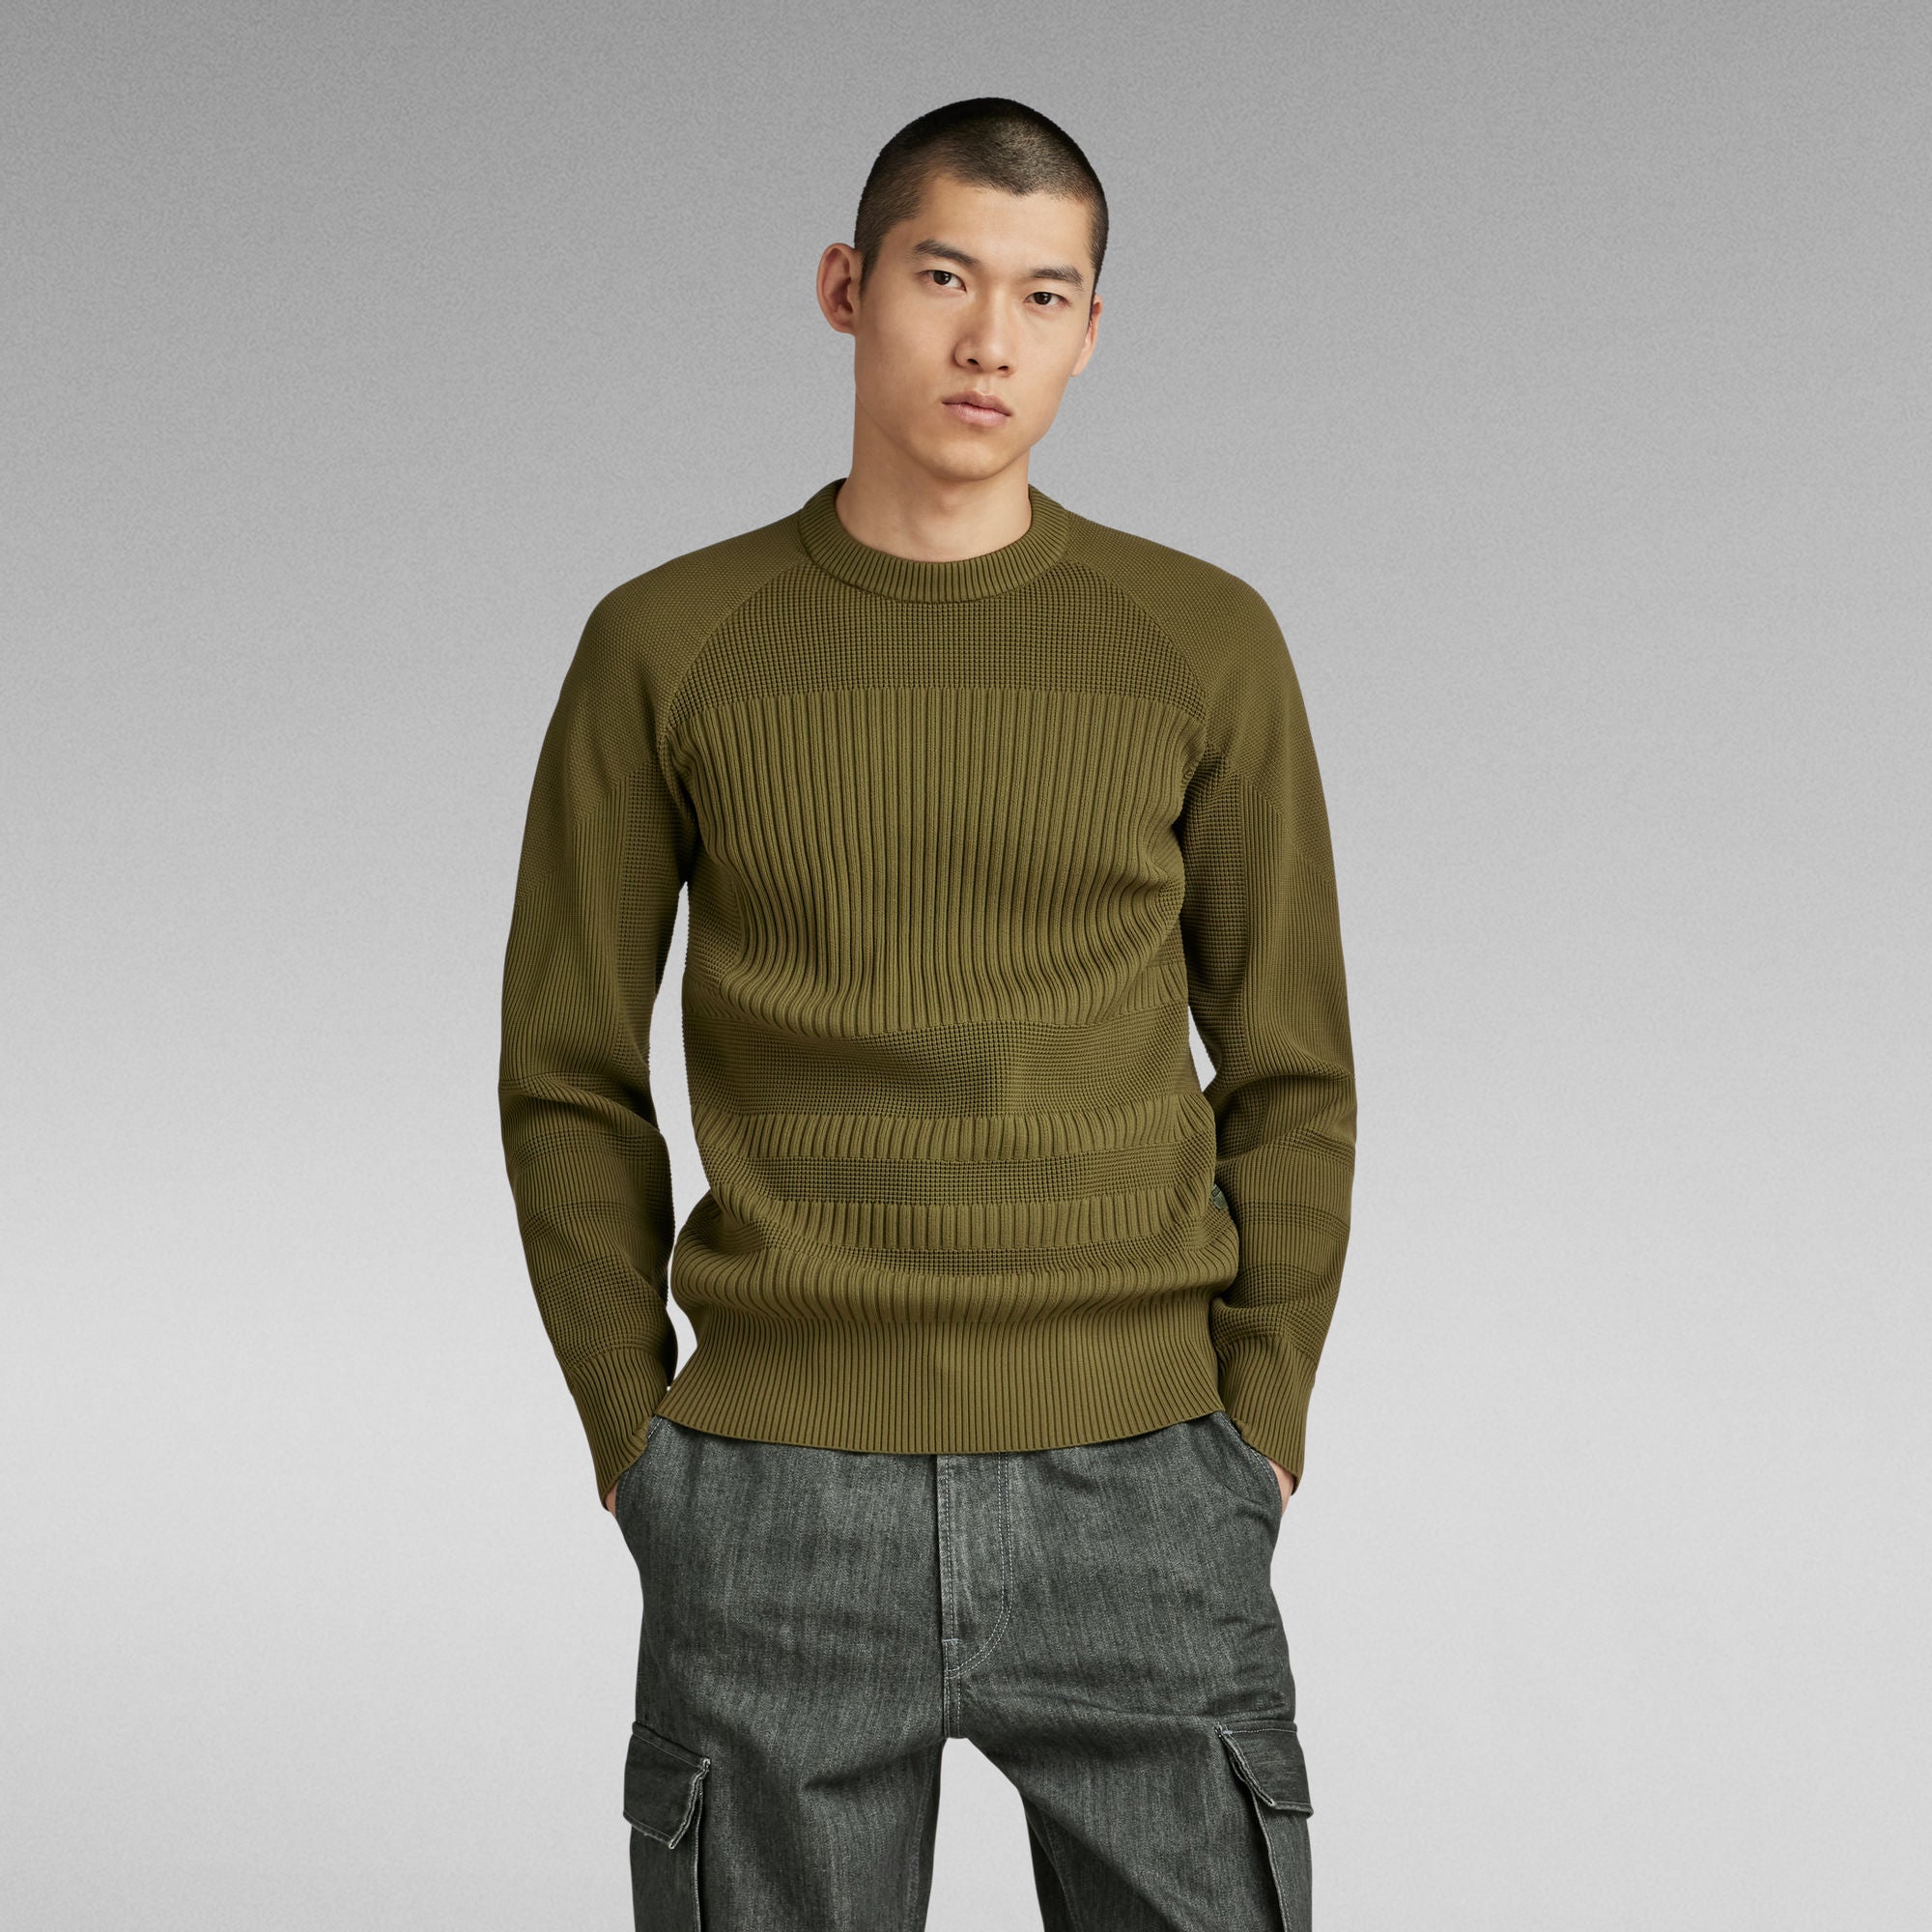 G-Star Raw - Engineered Knitted Sweater - Dark Olive